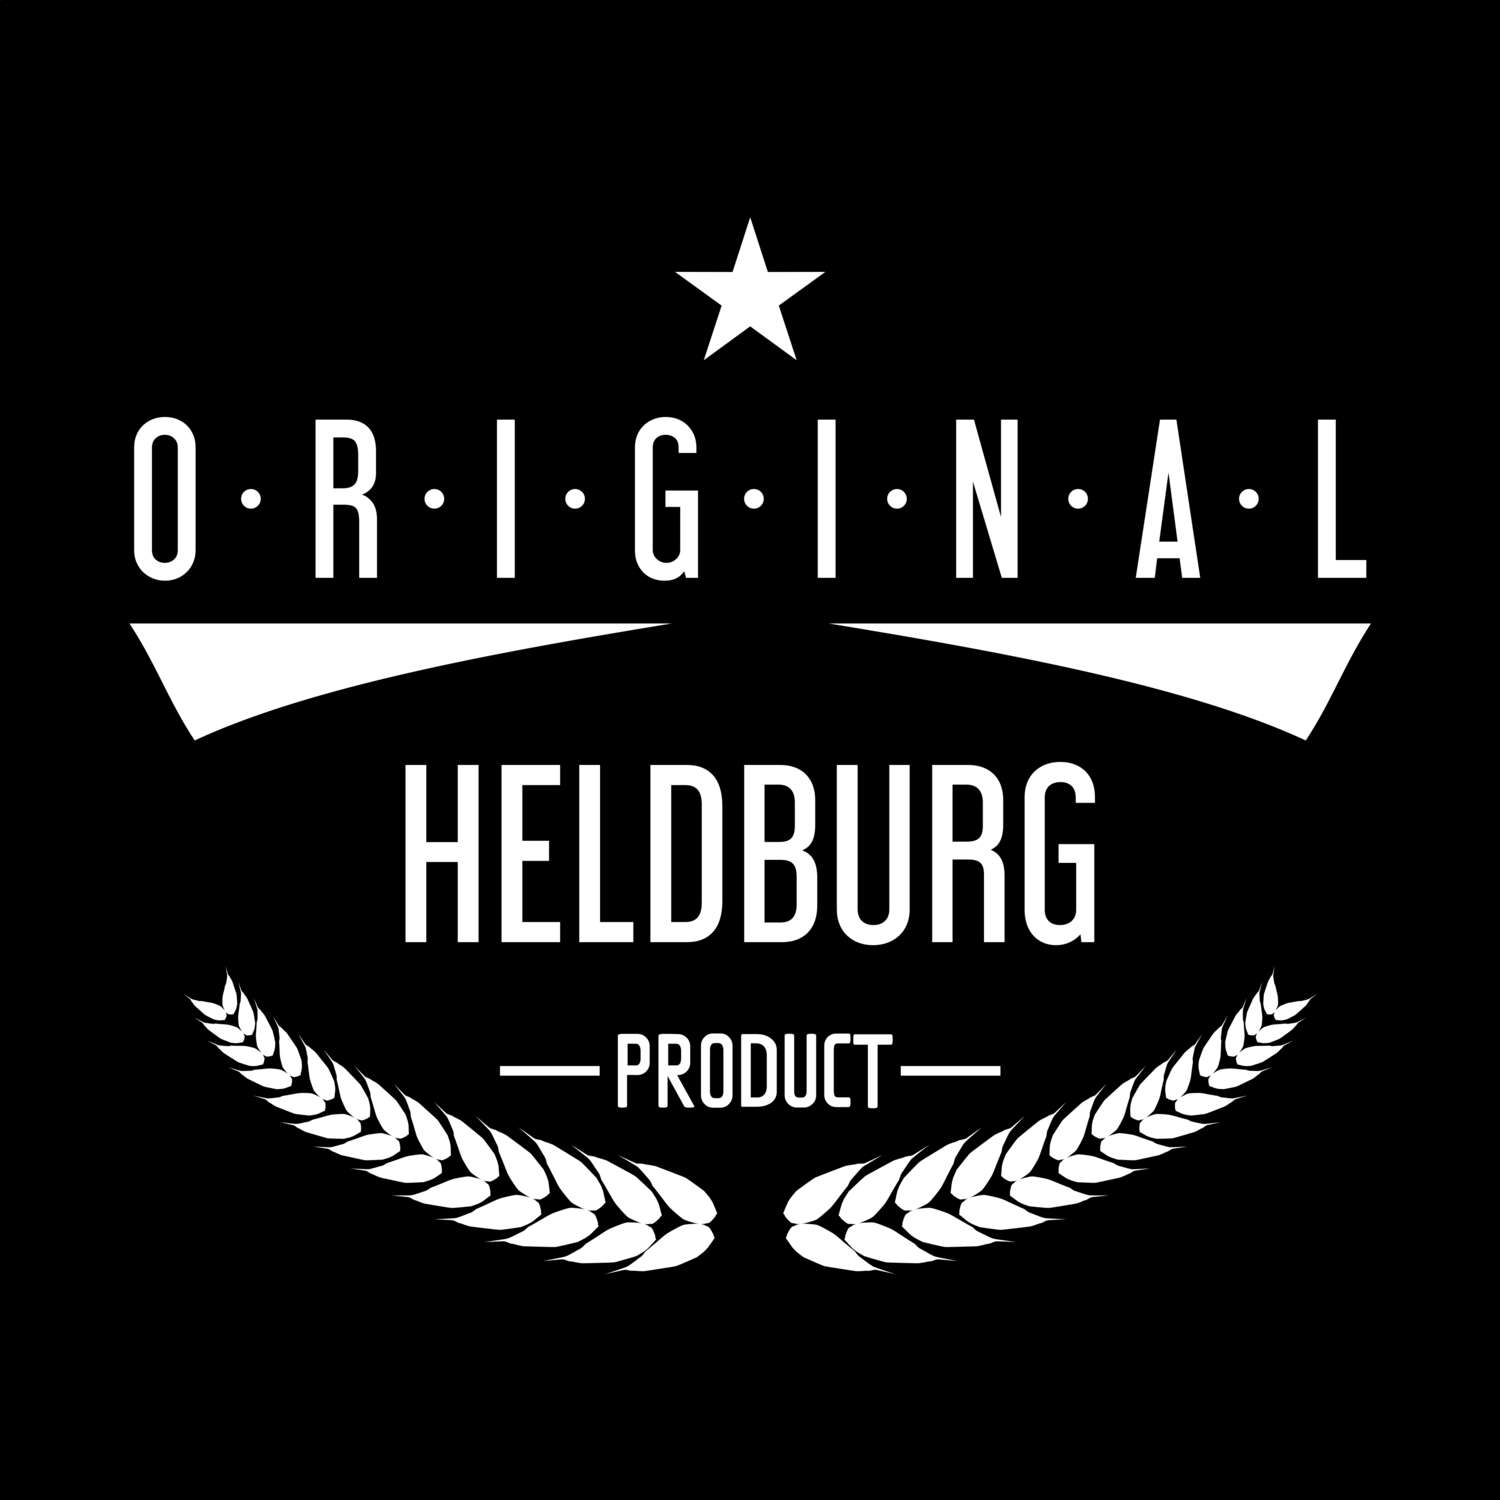 Heldburg T-Shirt »Original Product«